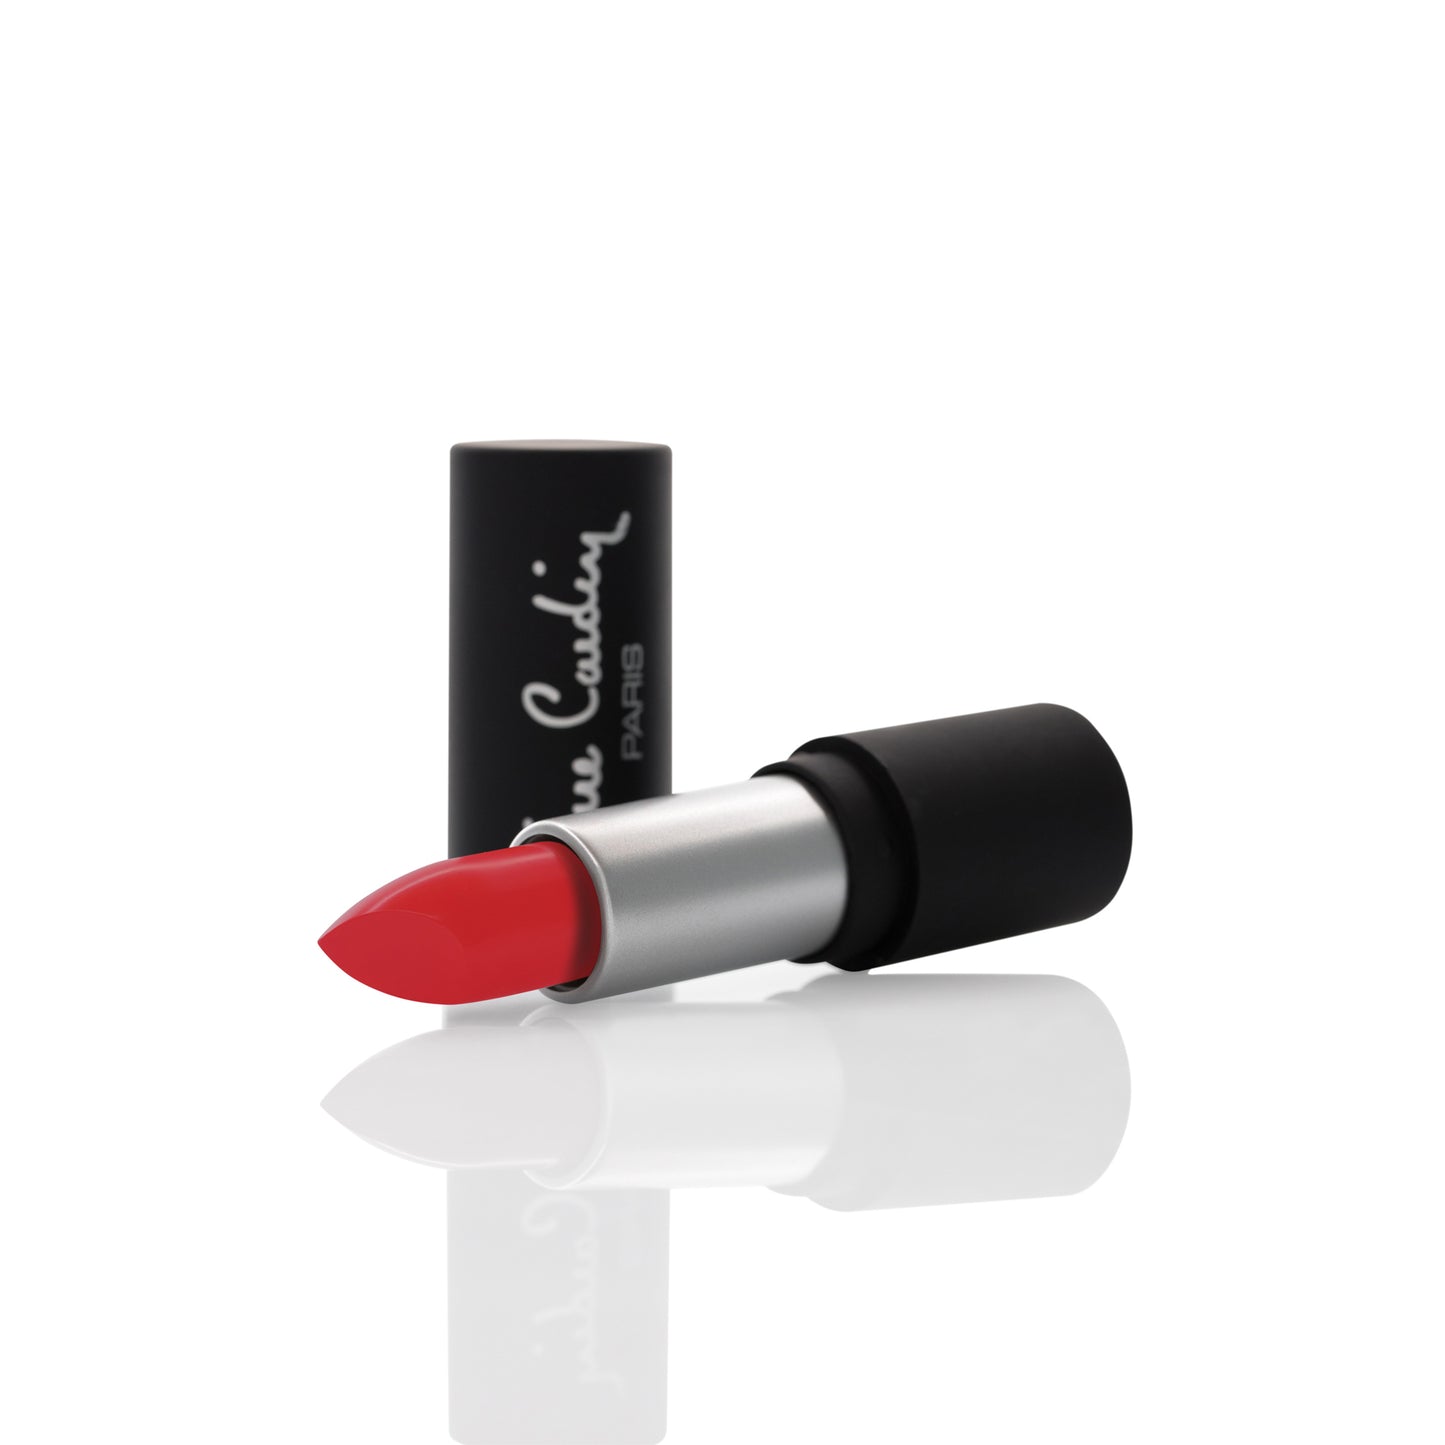 Pierre Cardin Matte Chiffon Touch Lipstick  Bright Red 189 - 4 gr